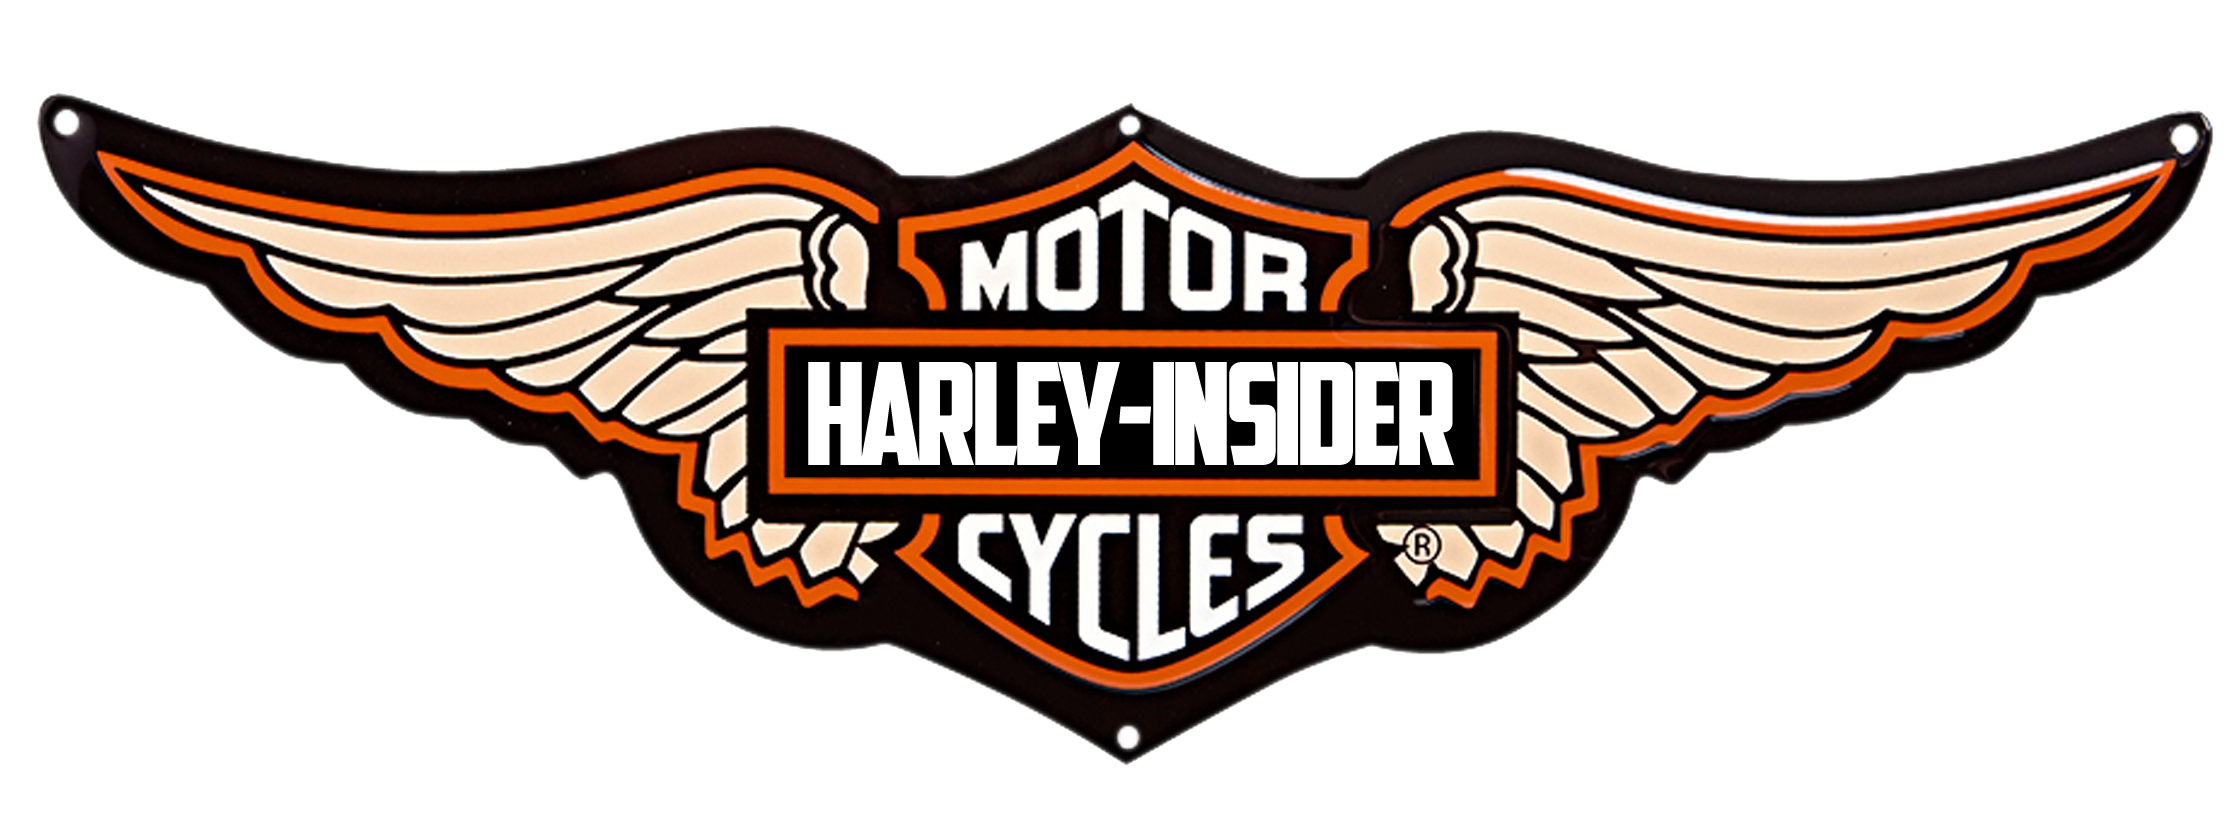 Harley Davidson Motorcycles Logo Hd Images 3 HD Wallpapers | aduphoto.